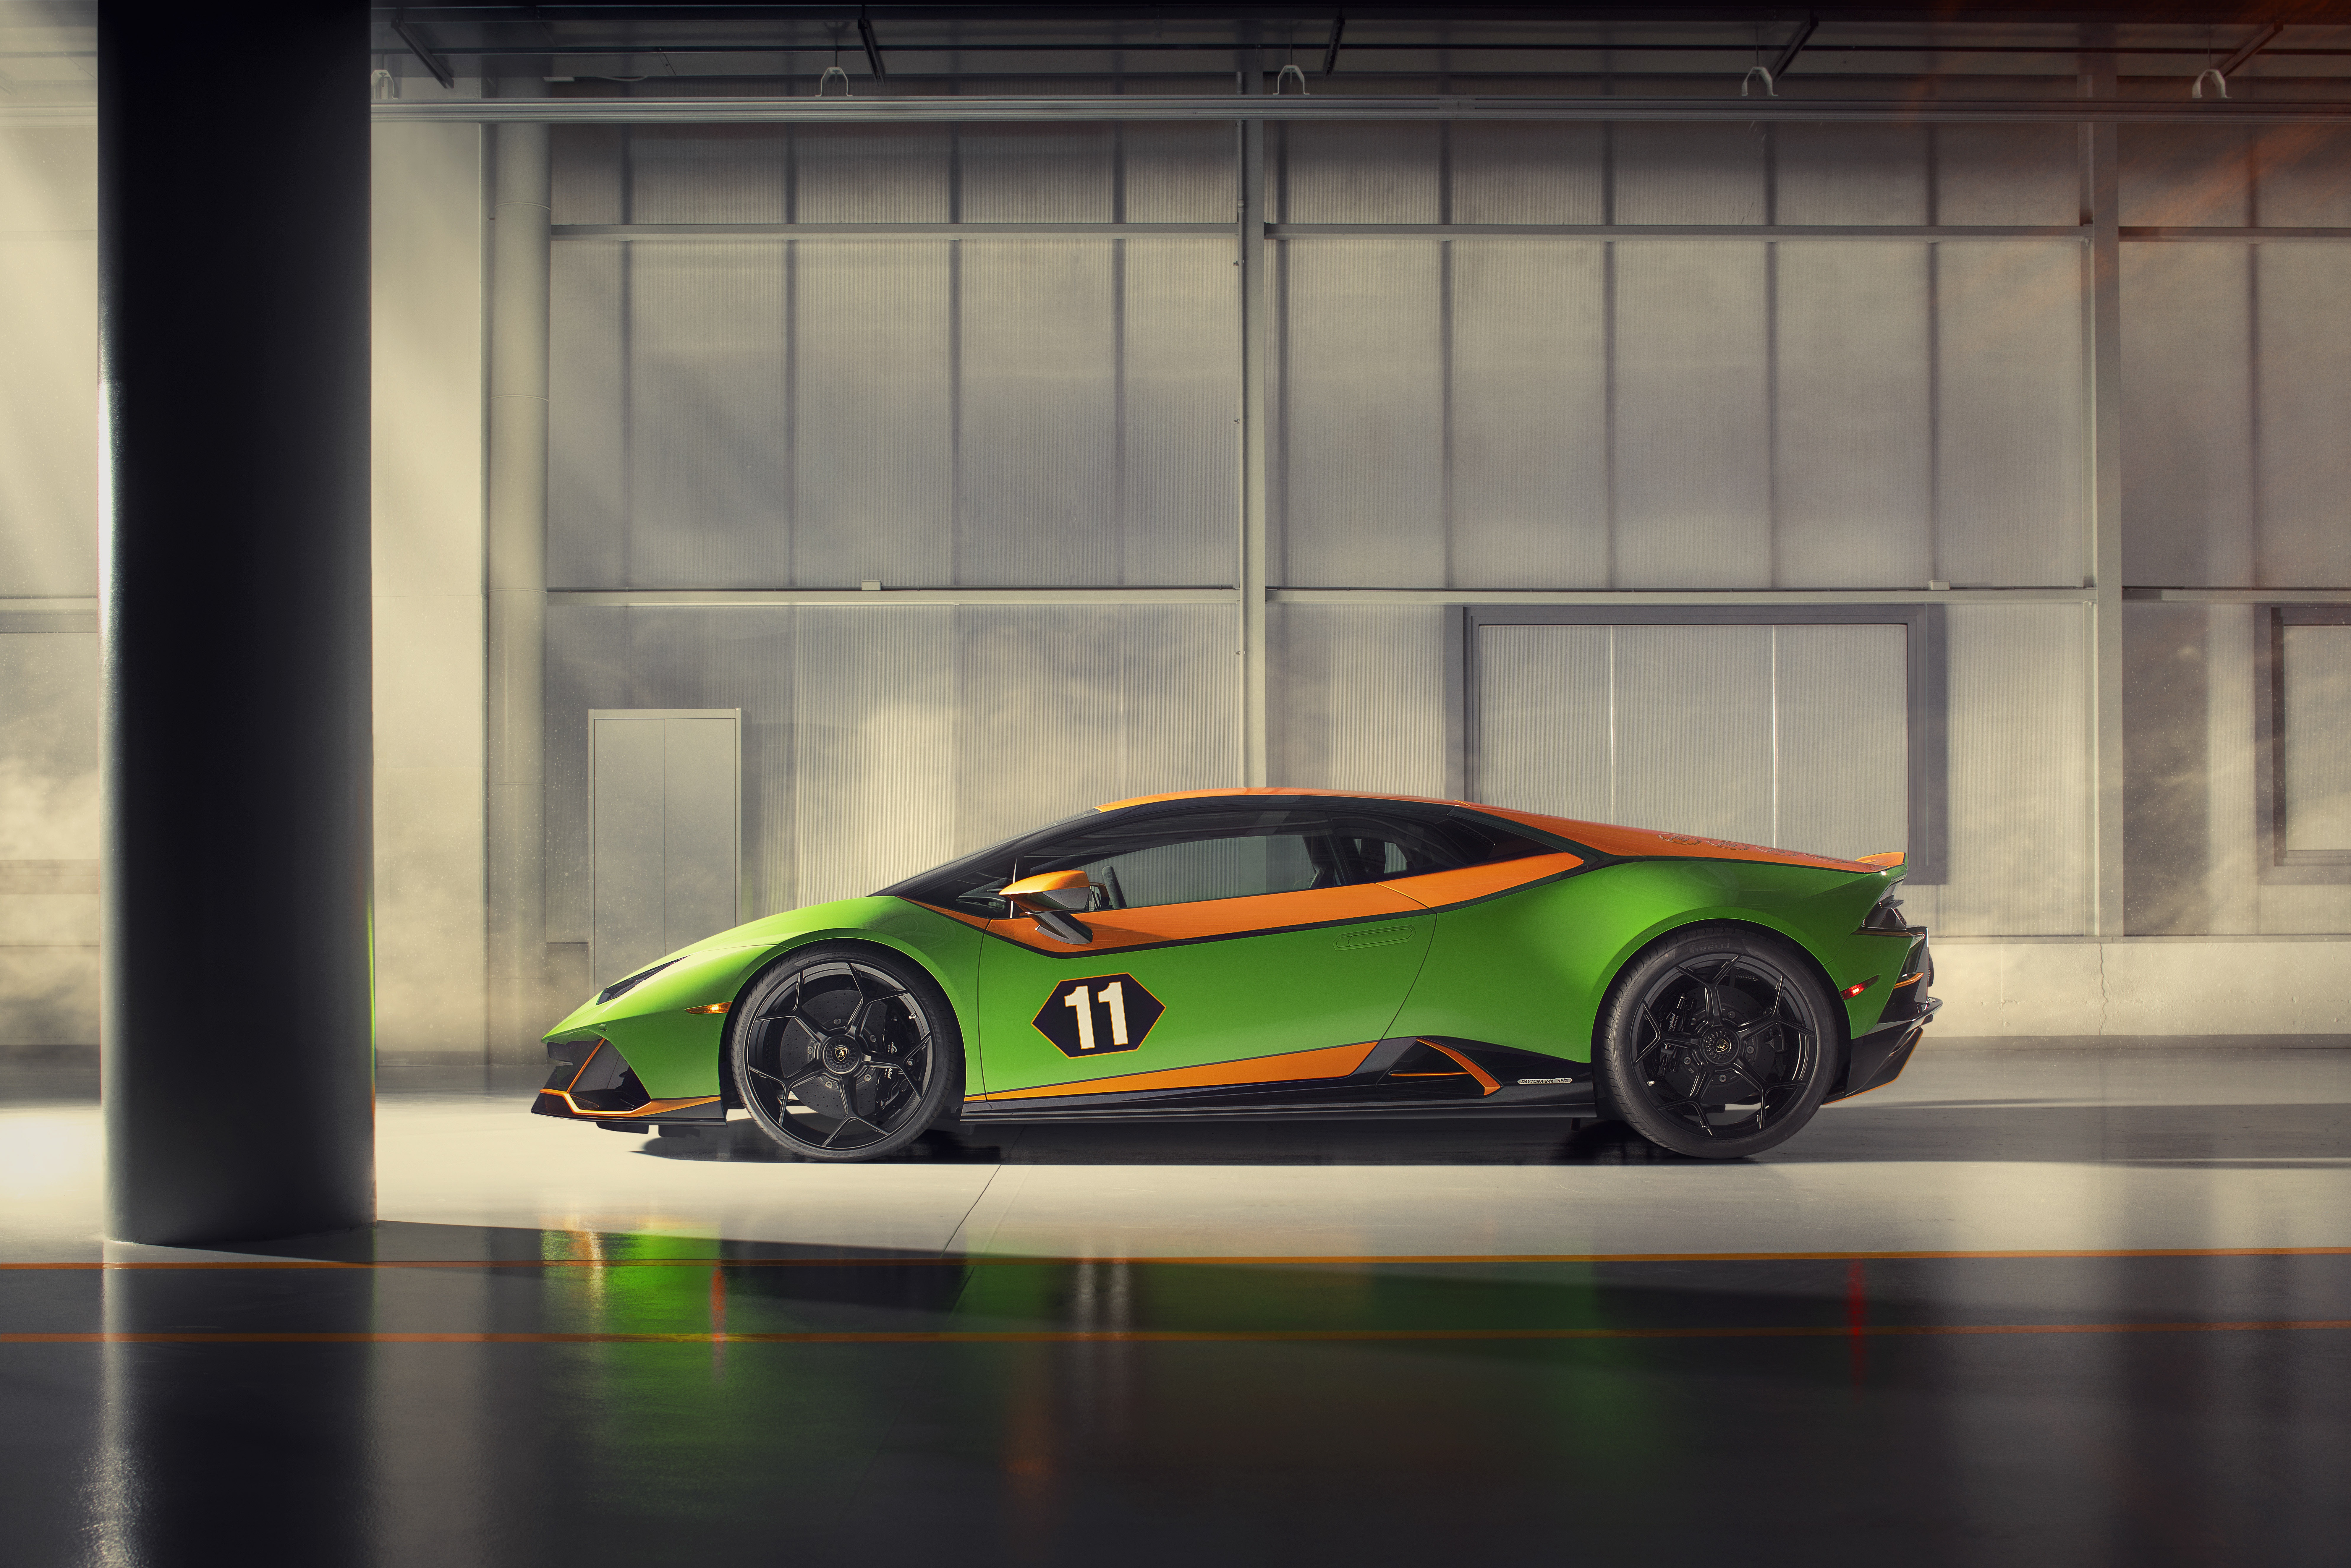 Скачать обои Празднование Lamborghini Huracan Evo Gt на телефон бесплатно